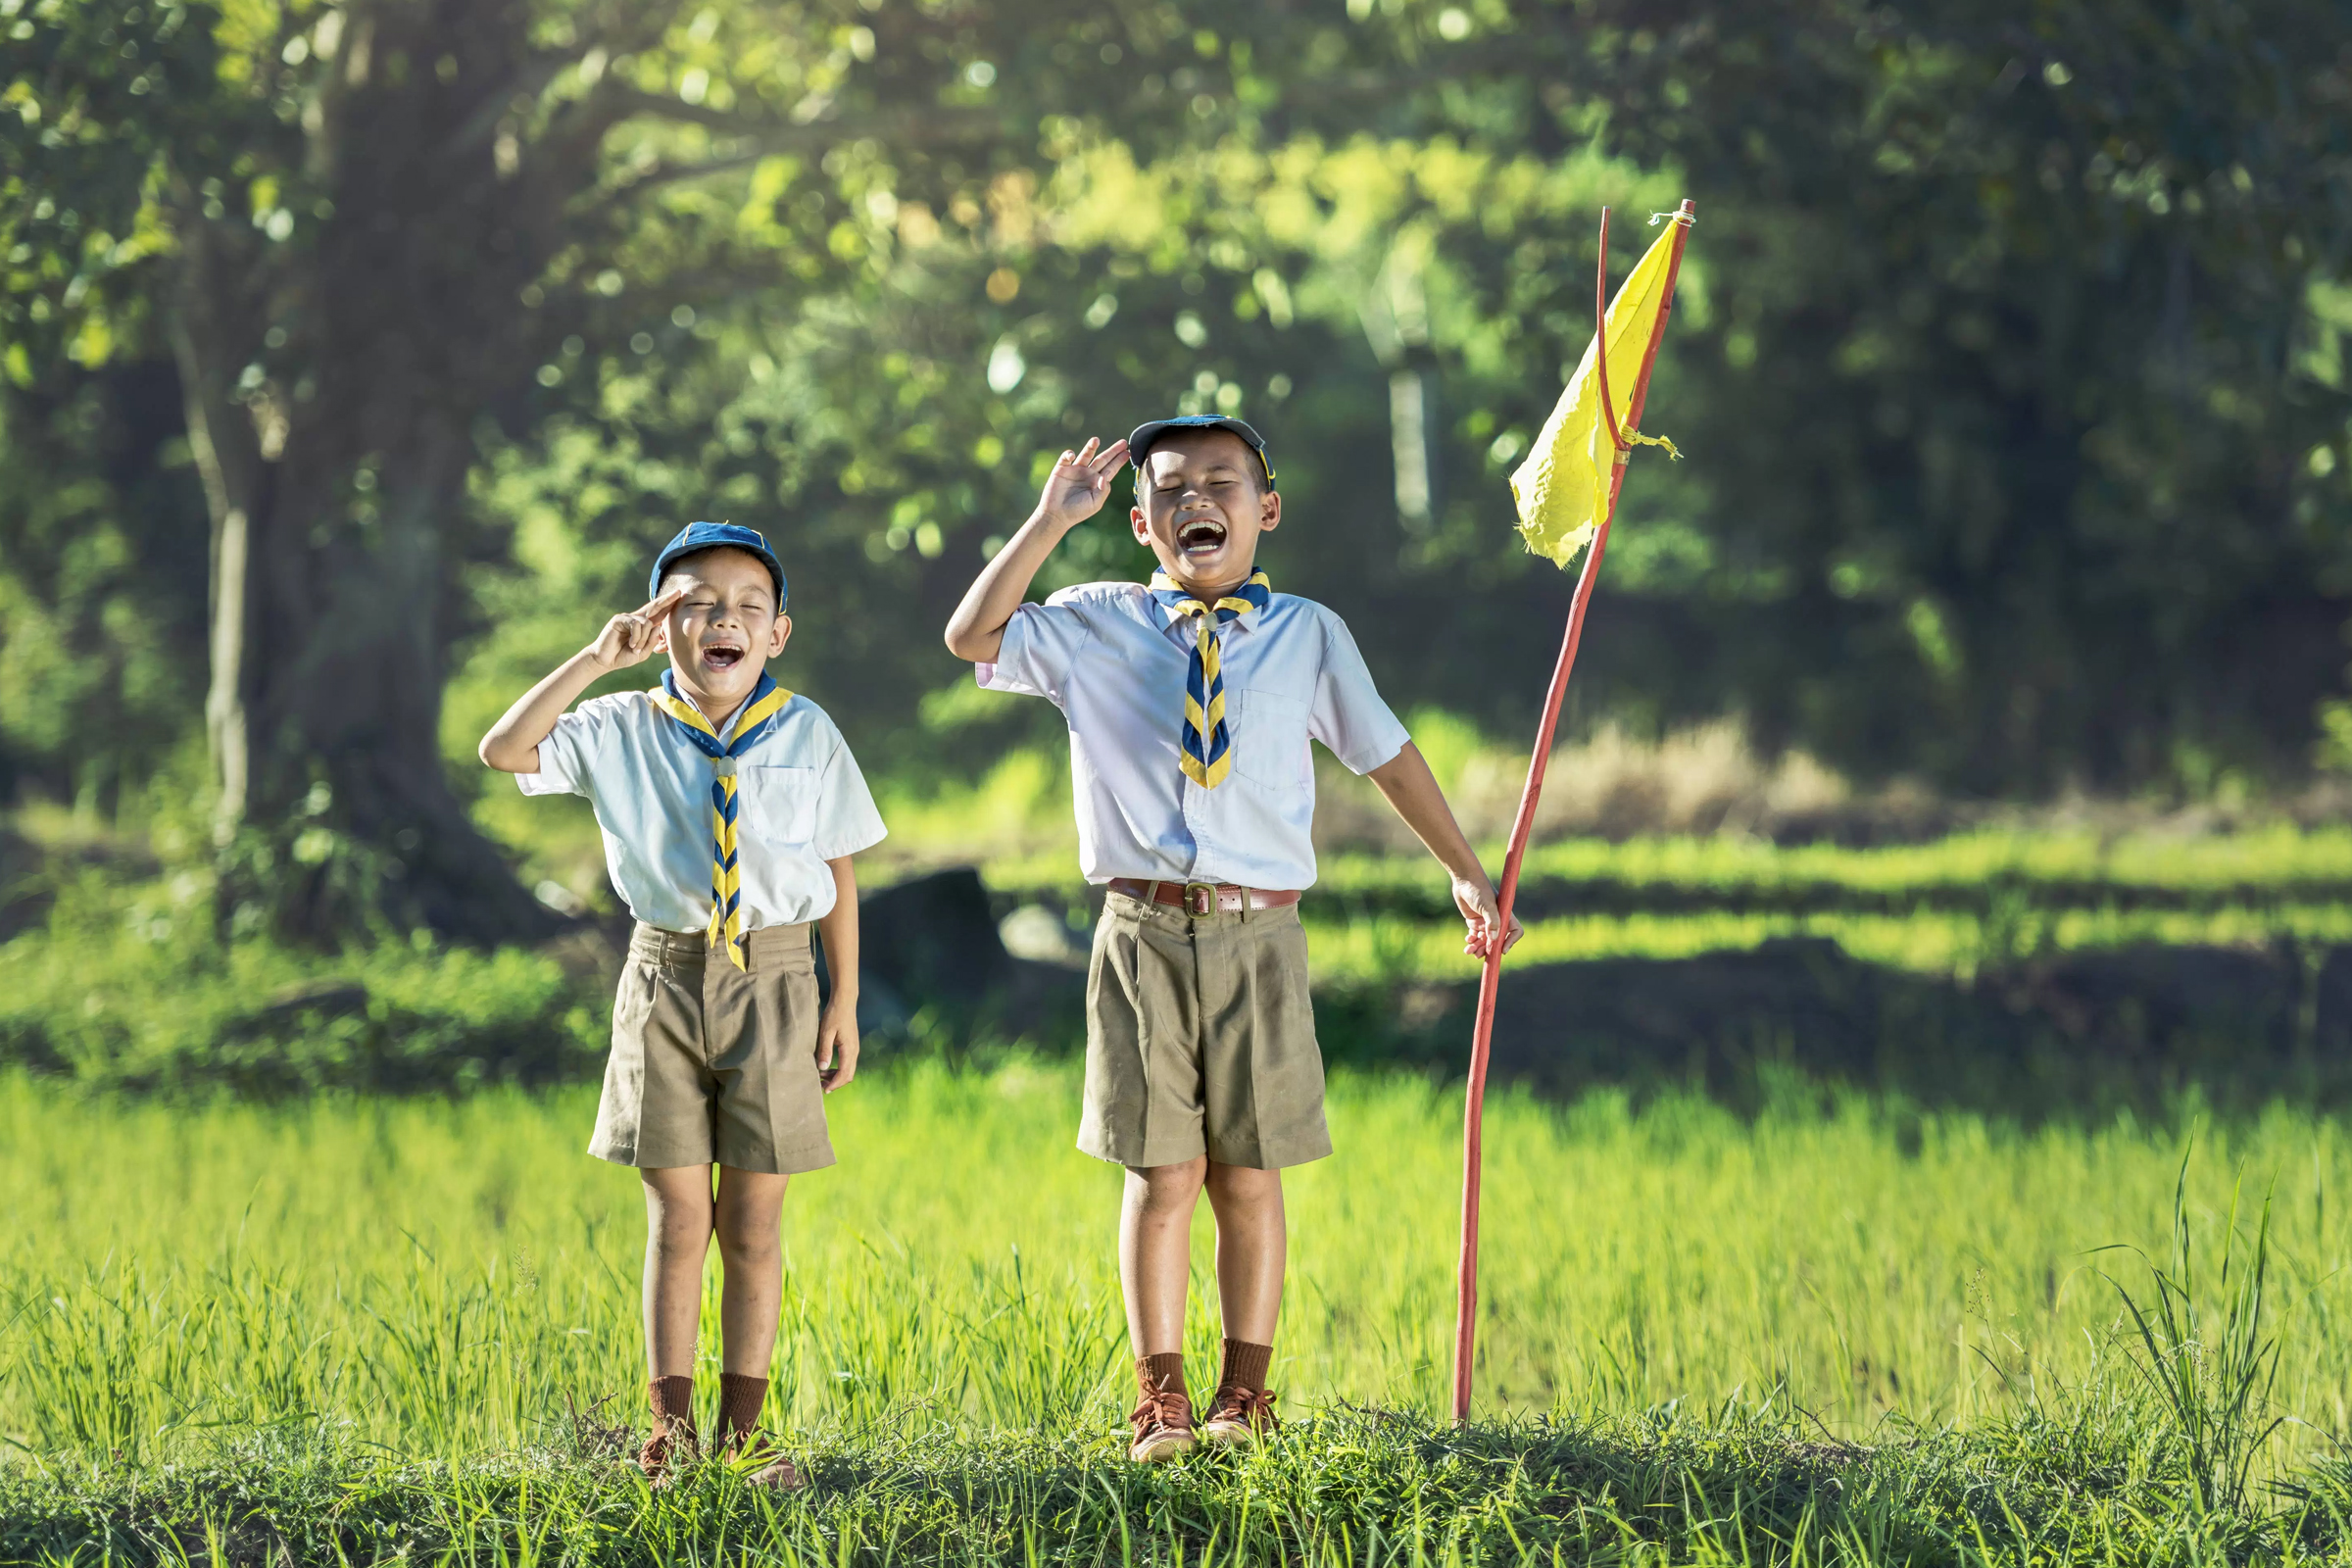 WEB SCOUT BOYS LAUGHING ©SasinTipchai-Shutterstock